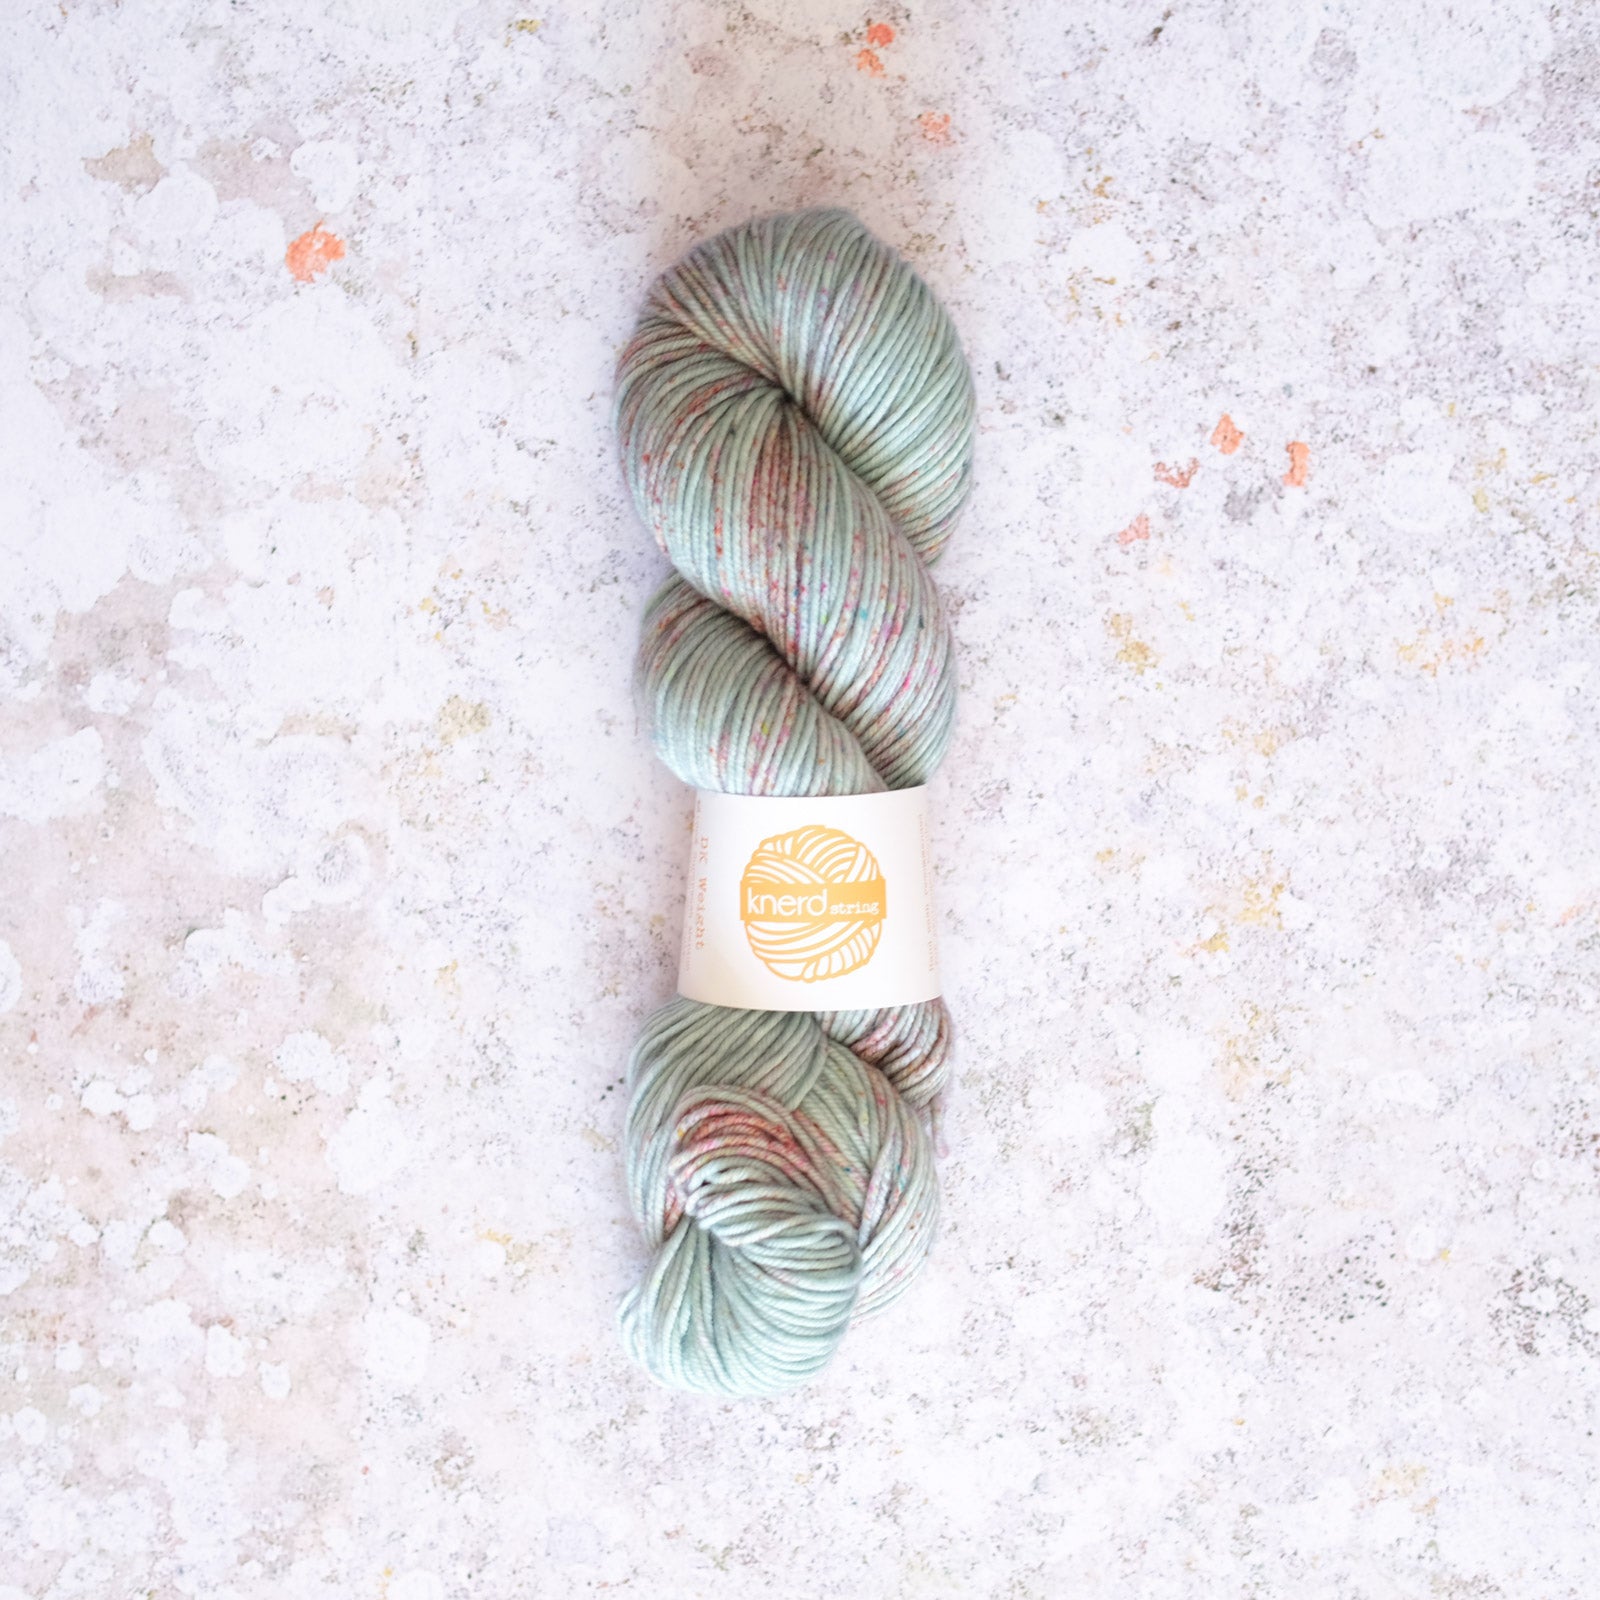 Knerd Shop Mint Condition DK yarn